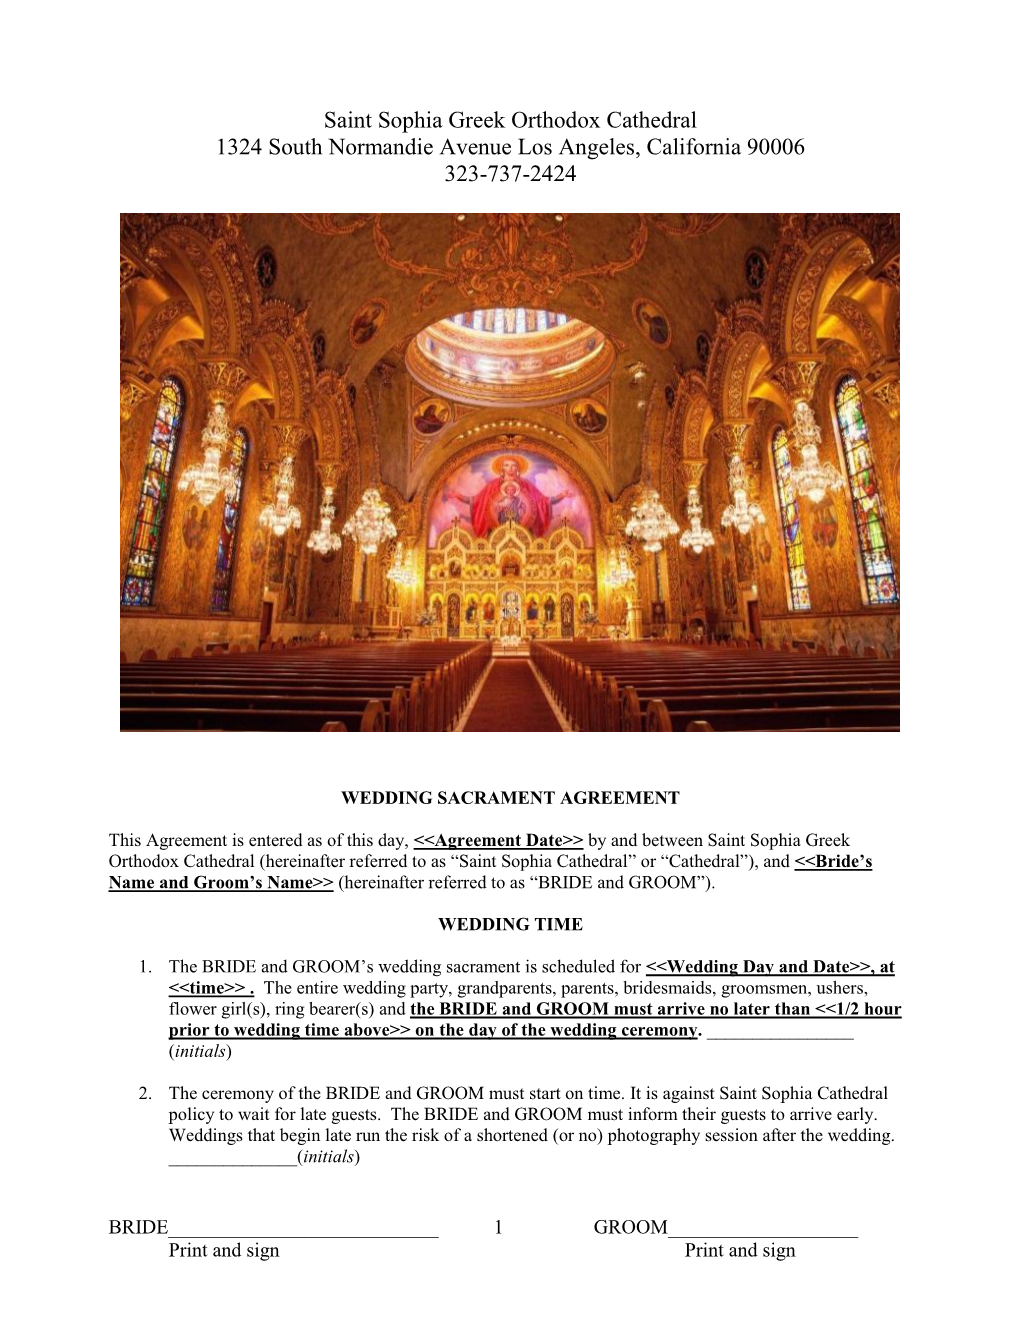 Saint Sophia Greek Orthodox Cathedral 1324 South Normandie Avenue Los Angeles, California 90006 323-737-2424